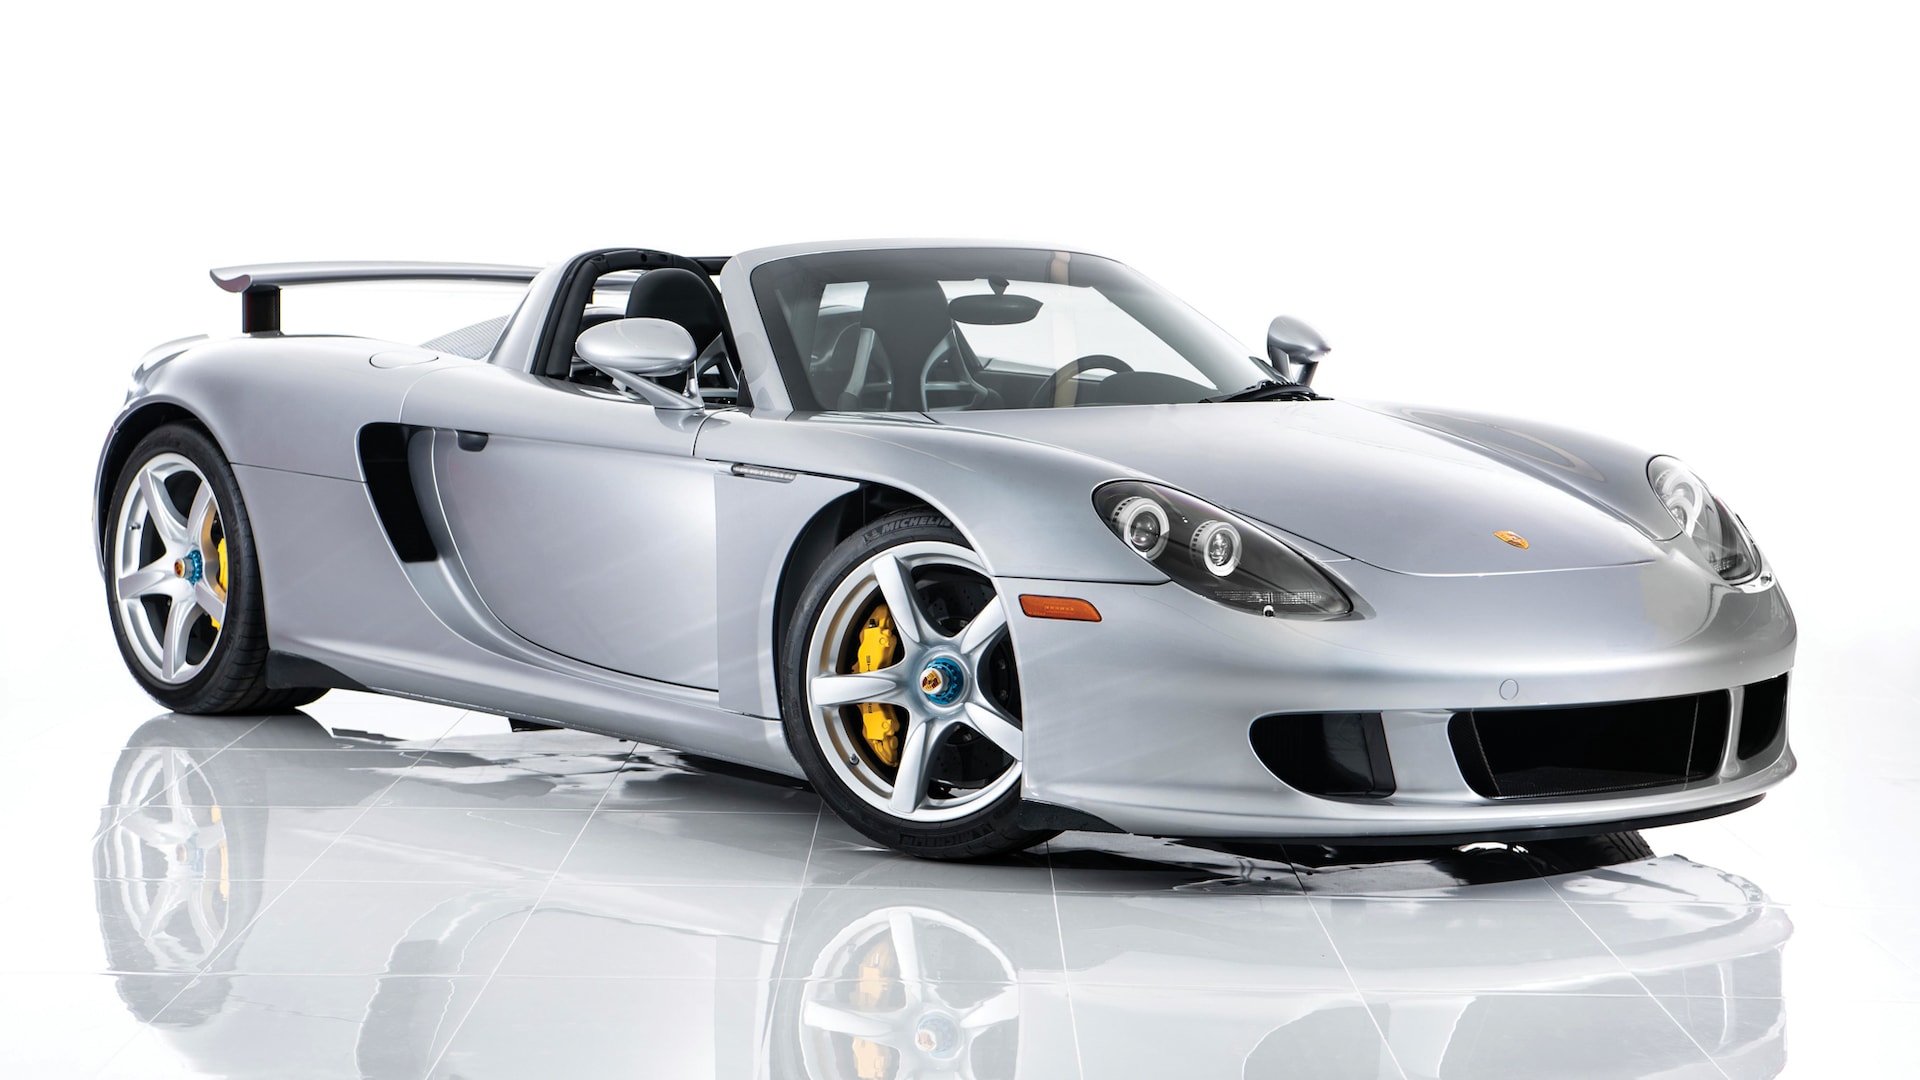 Market Watch: 2004-2006 Porsche Carrera GT Pricing and More